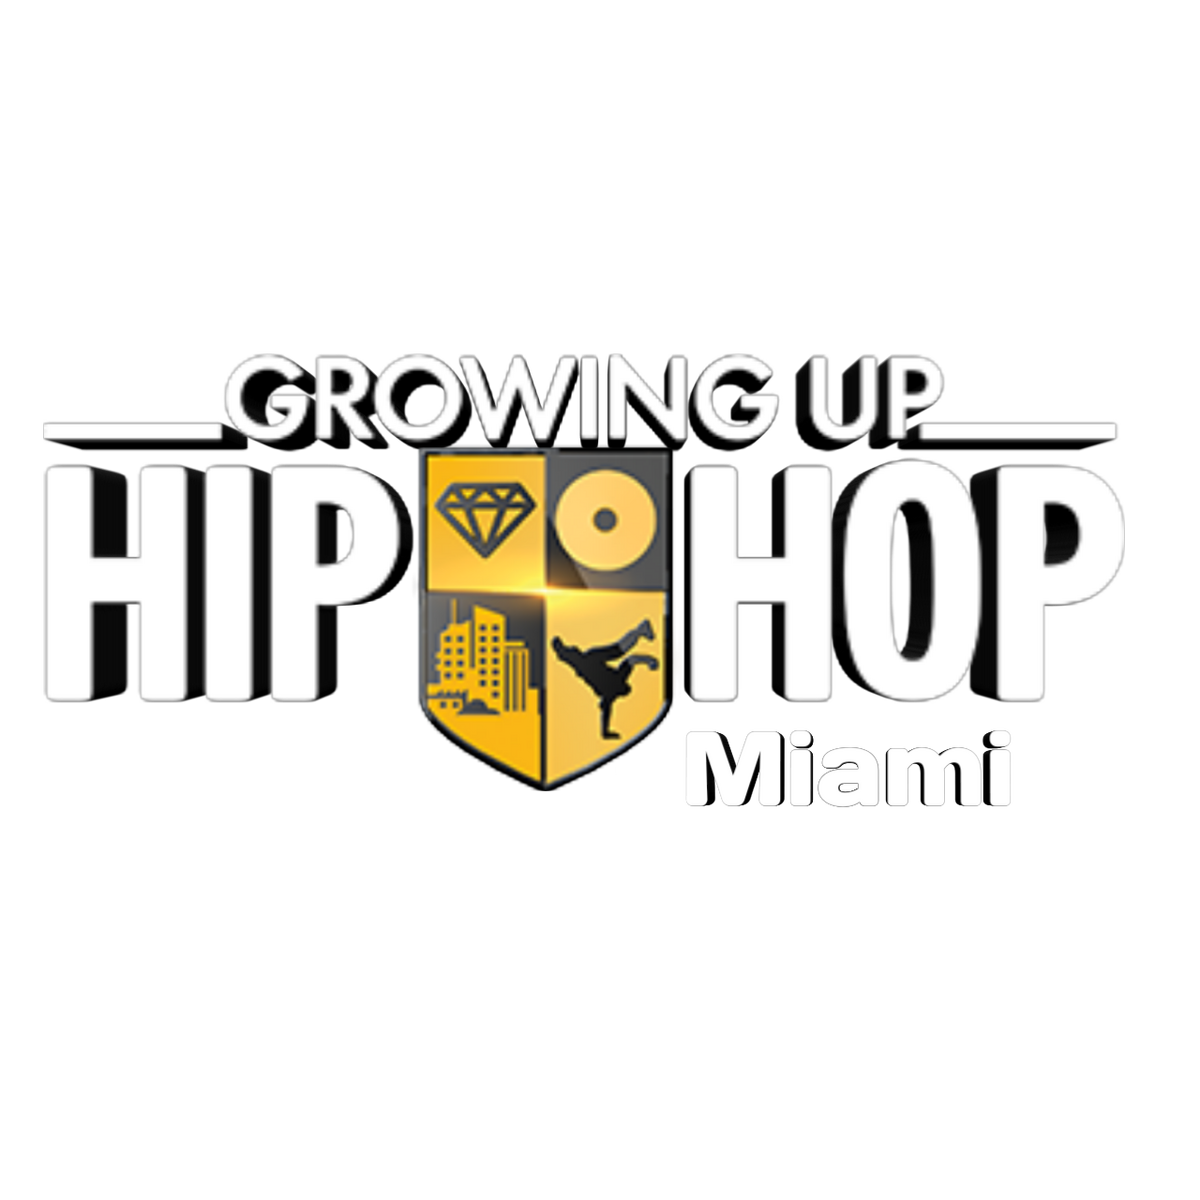 Growing Up Hip Hop New York, Aboss Studios Wiki